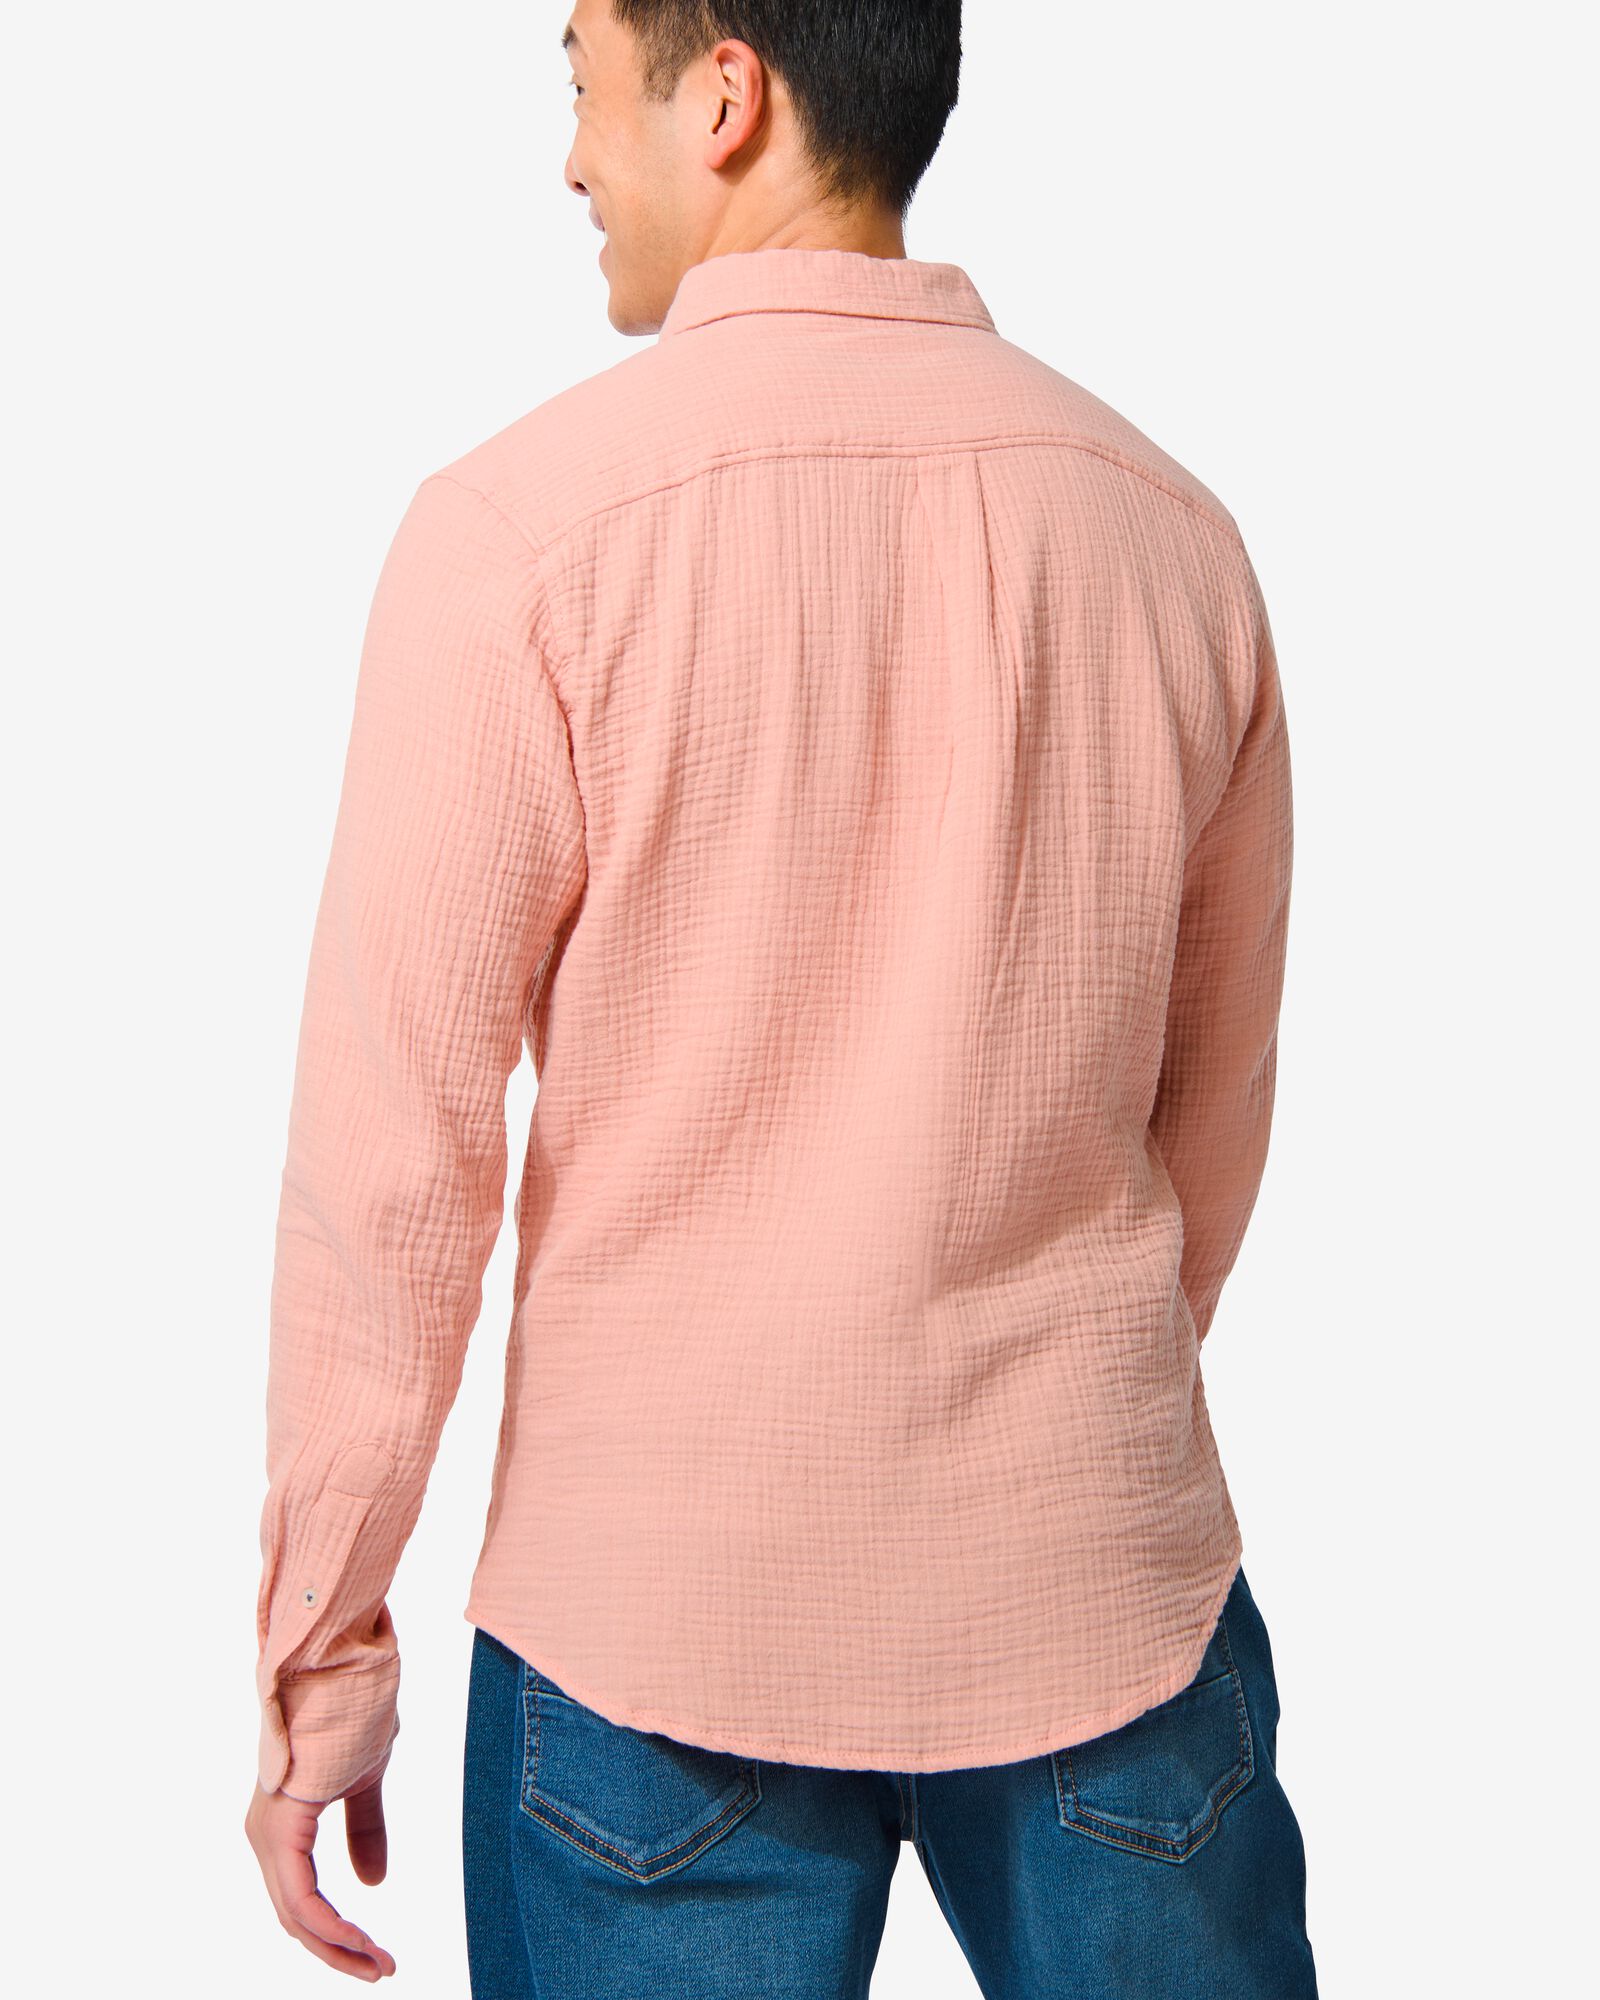 heren overhemd mousseline  roze XL - 2108323 - HEMA